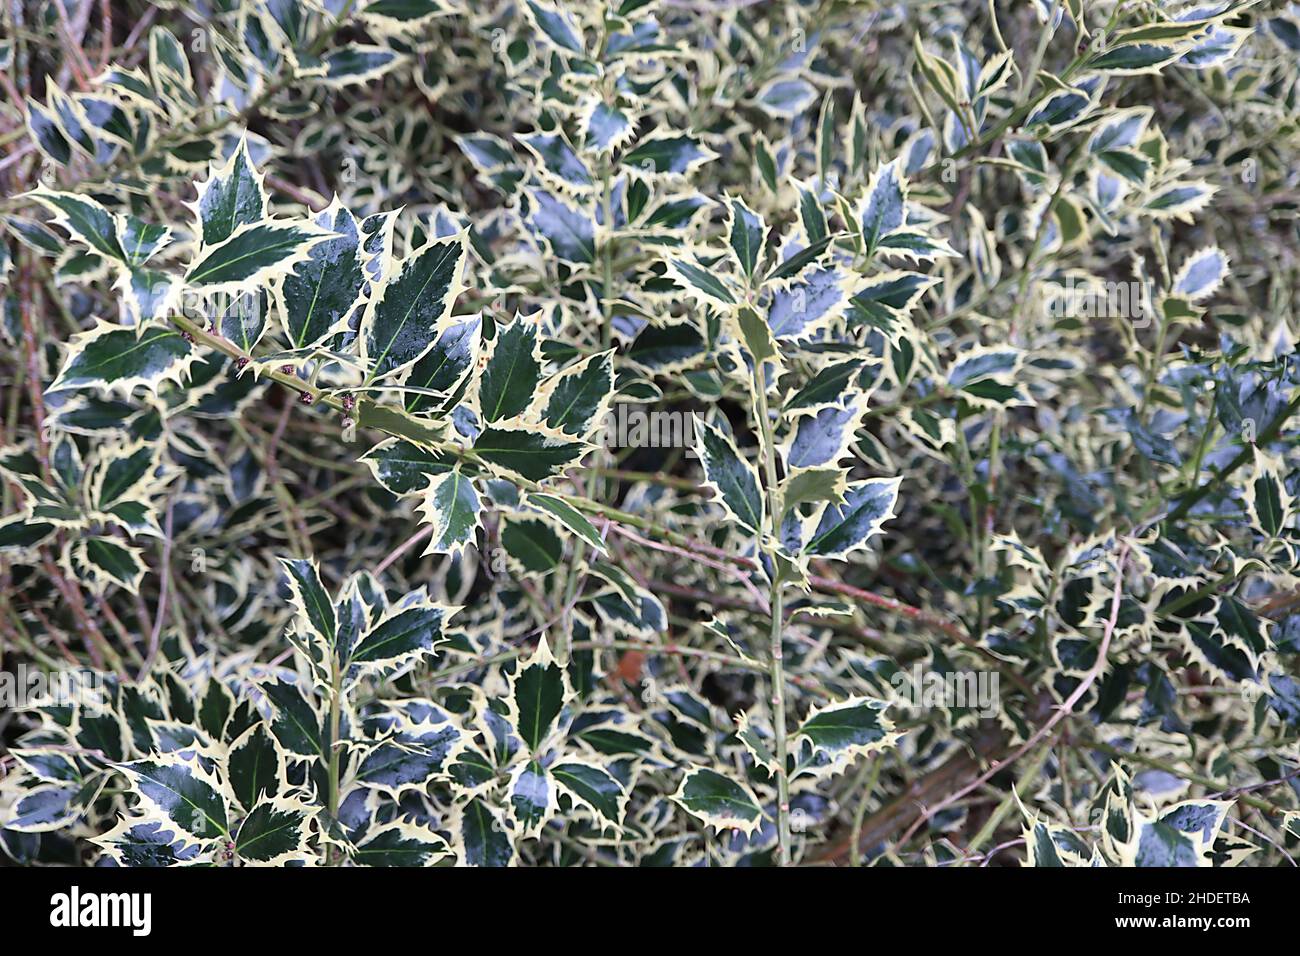 Ilex aquifolium Elegantissima holly Elegantissima – dense foliage with dark green leaves, pale green midrib and spiky cream margins,  January, England Stock Photo